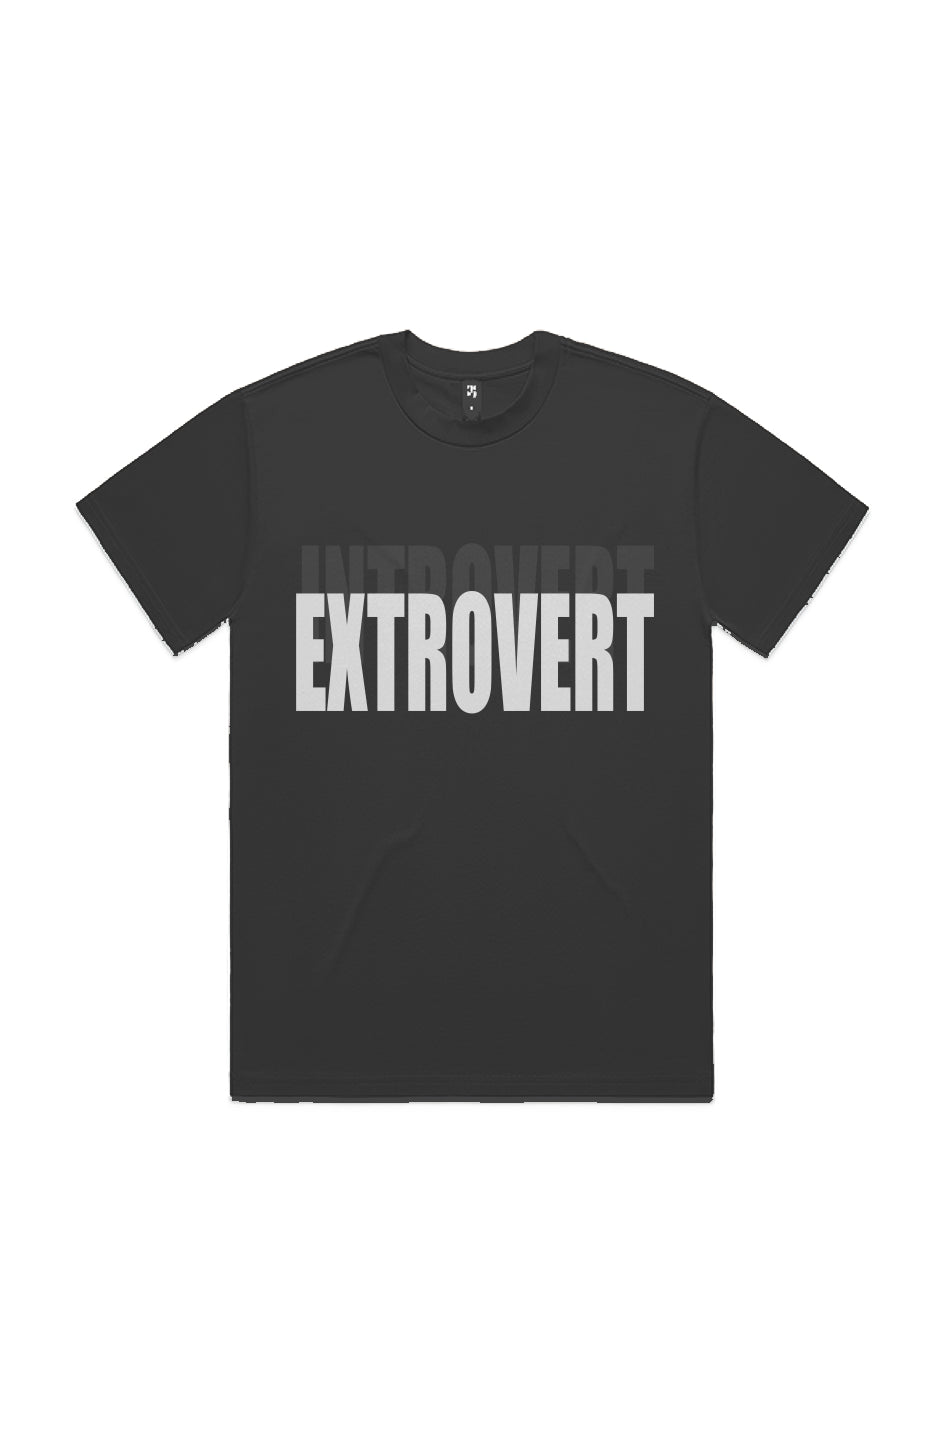 INTRO/EXTRO VERT (T-Shirt) Black